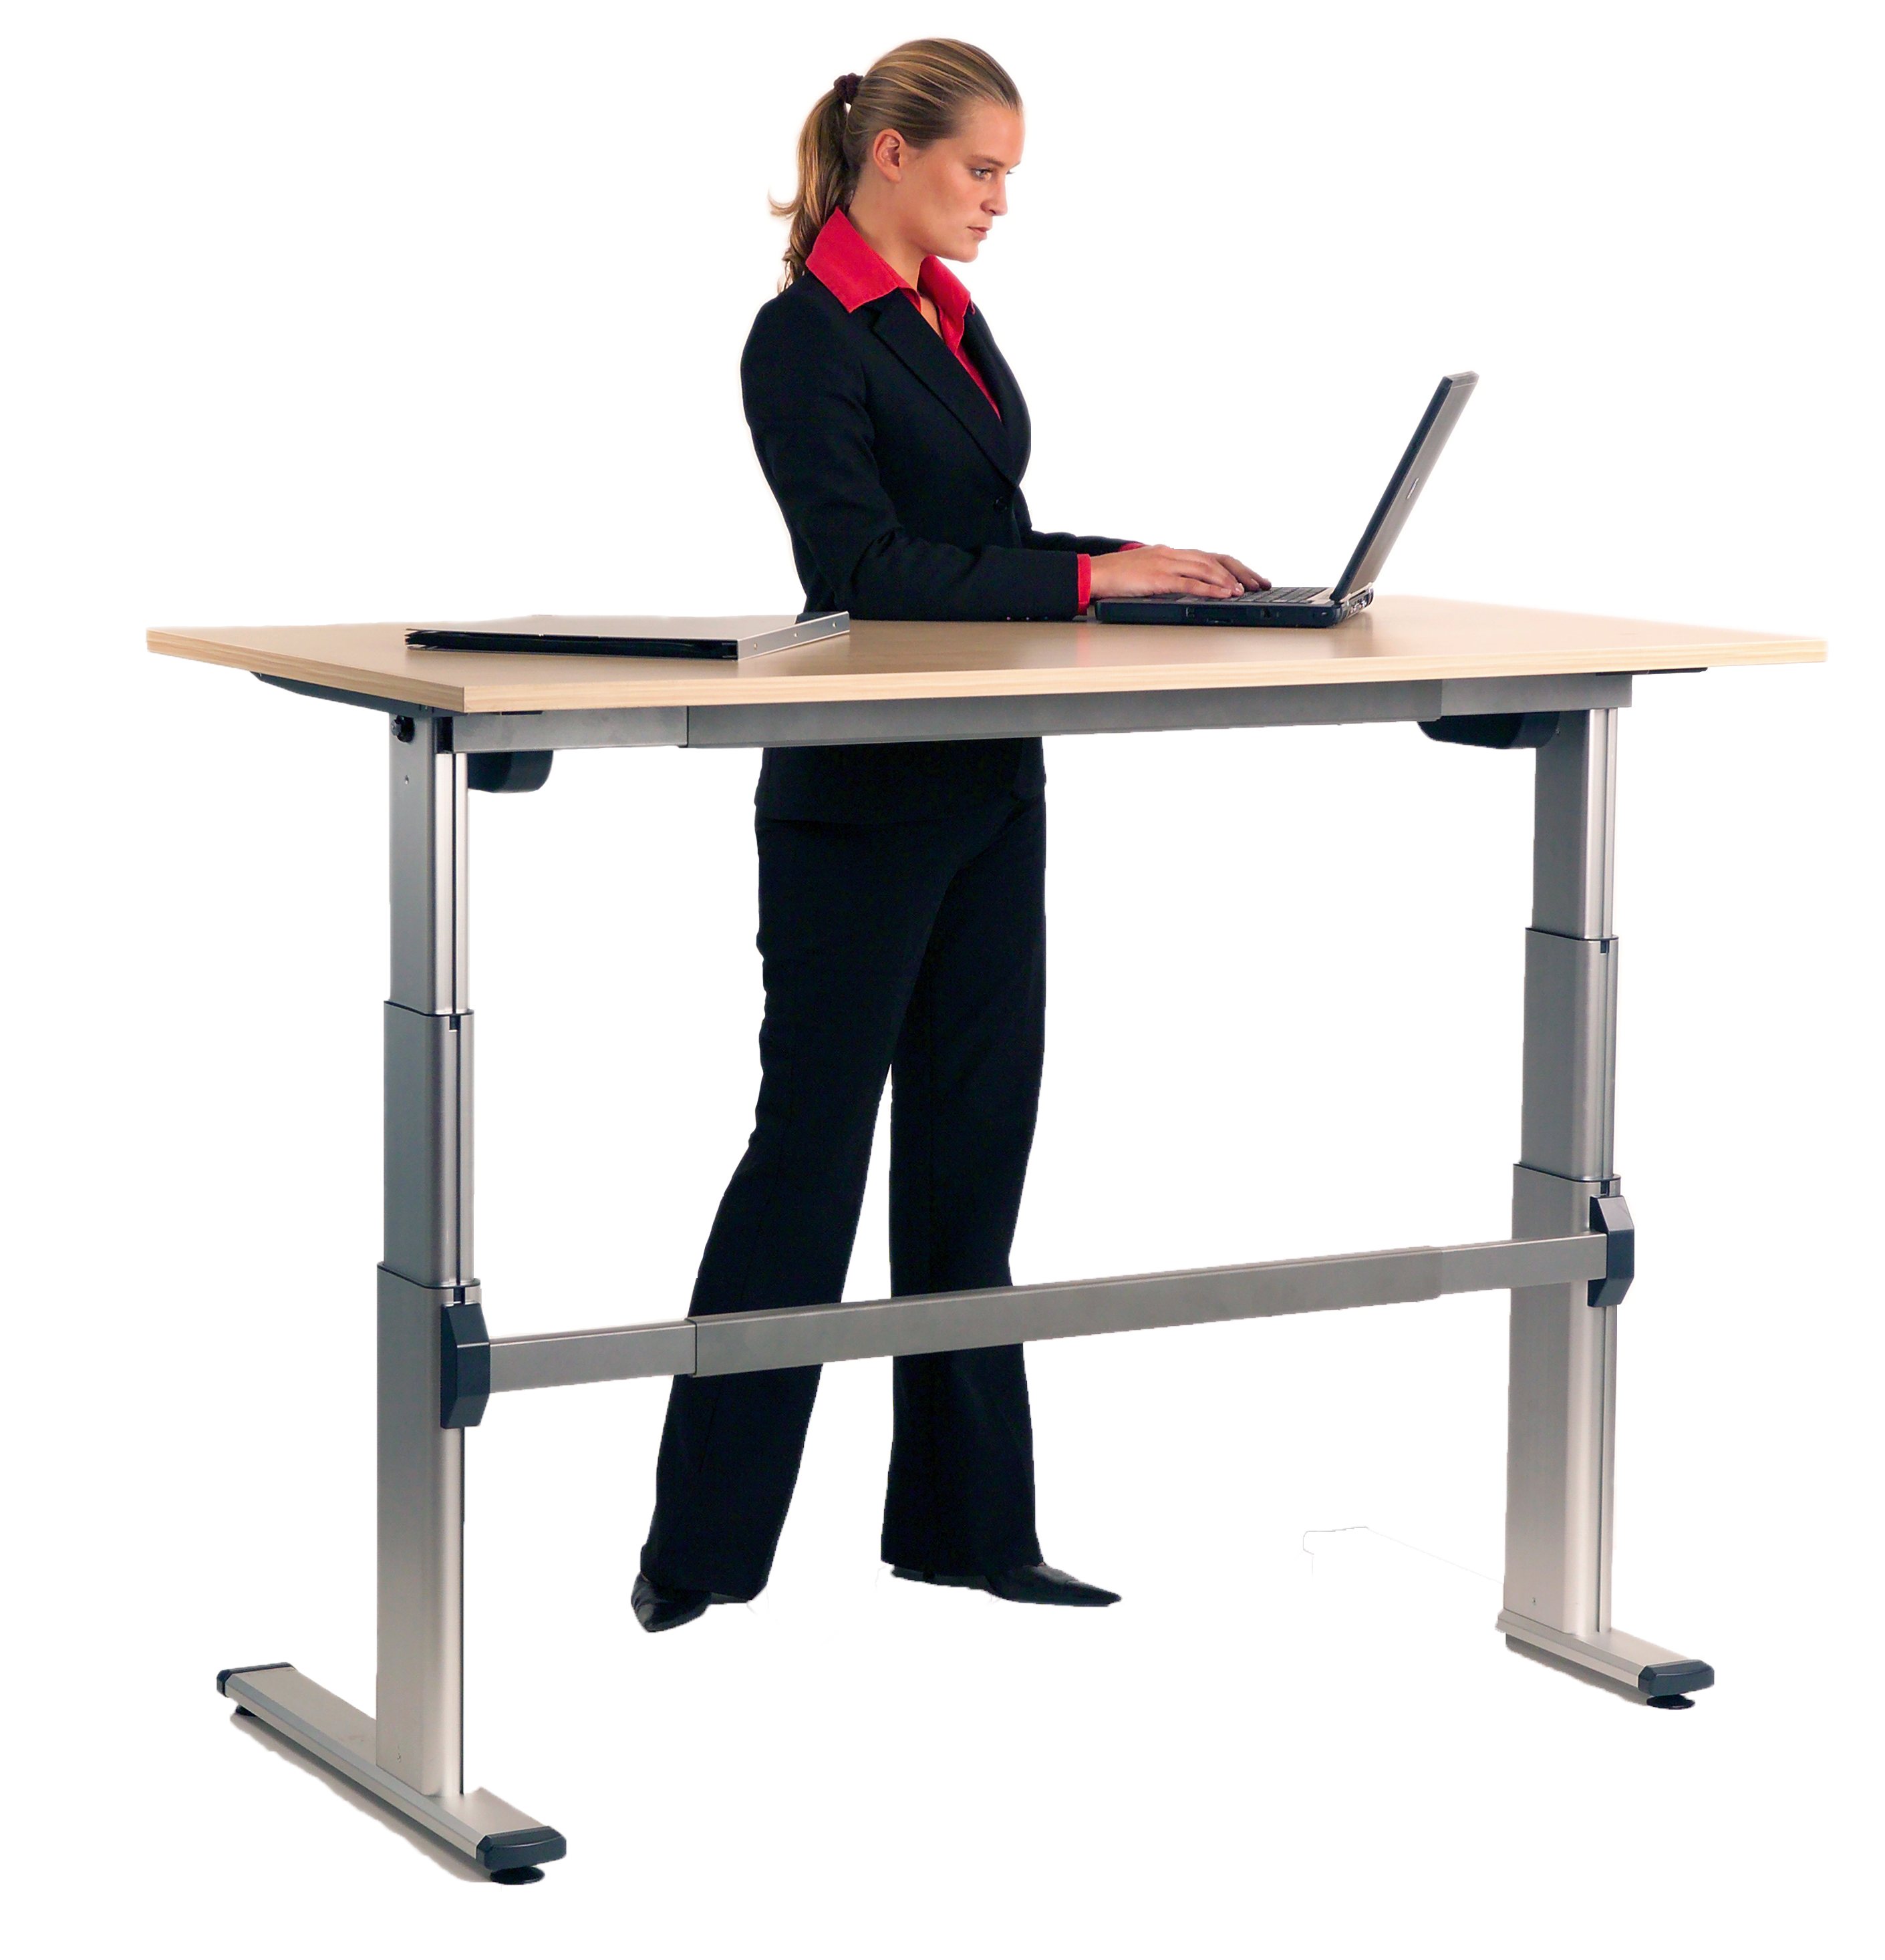 Height adjustable desks are t